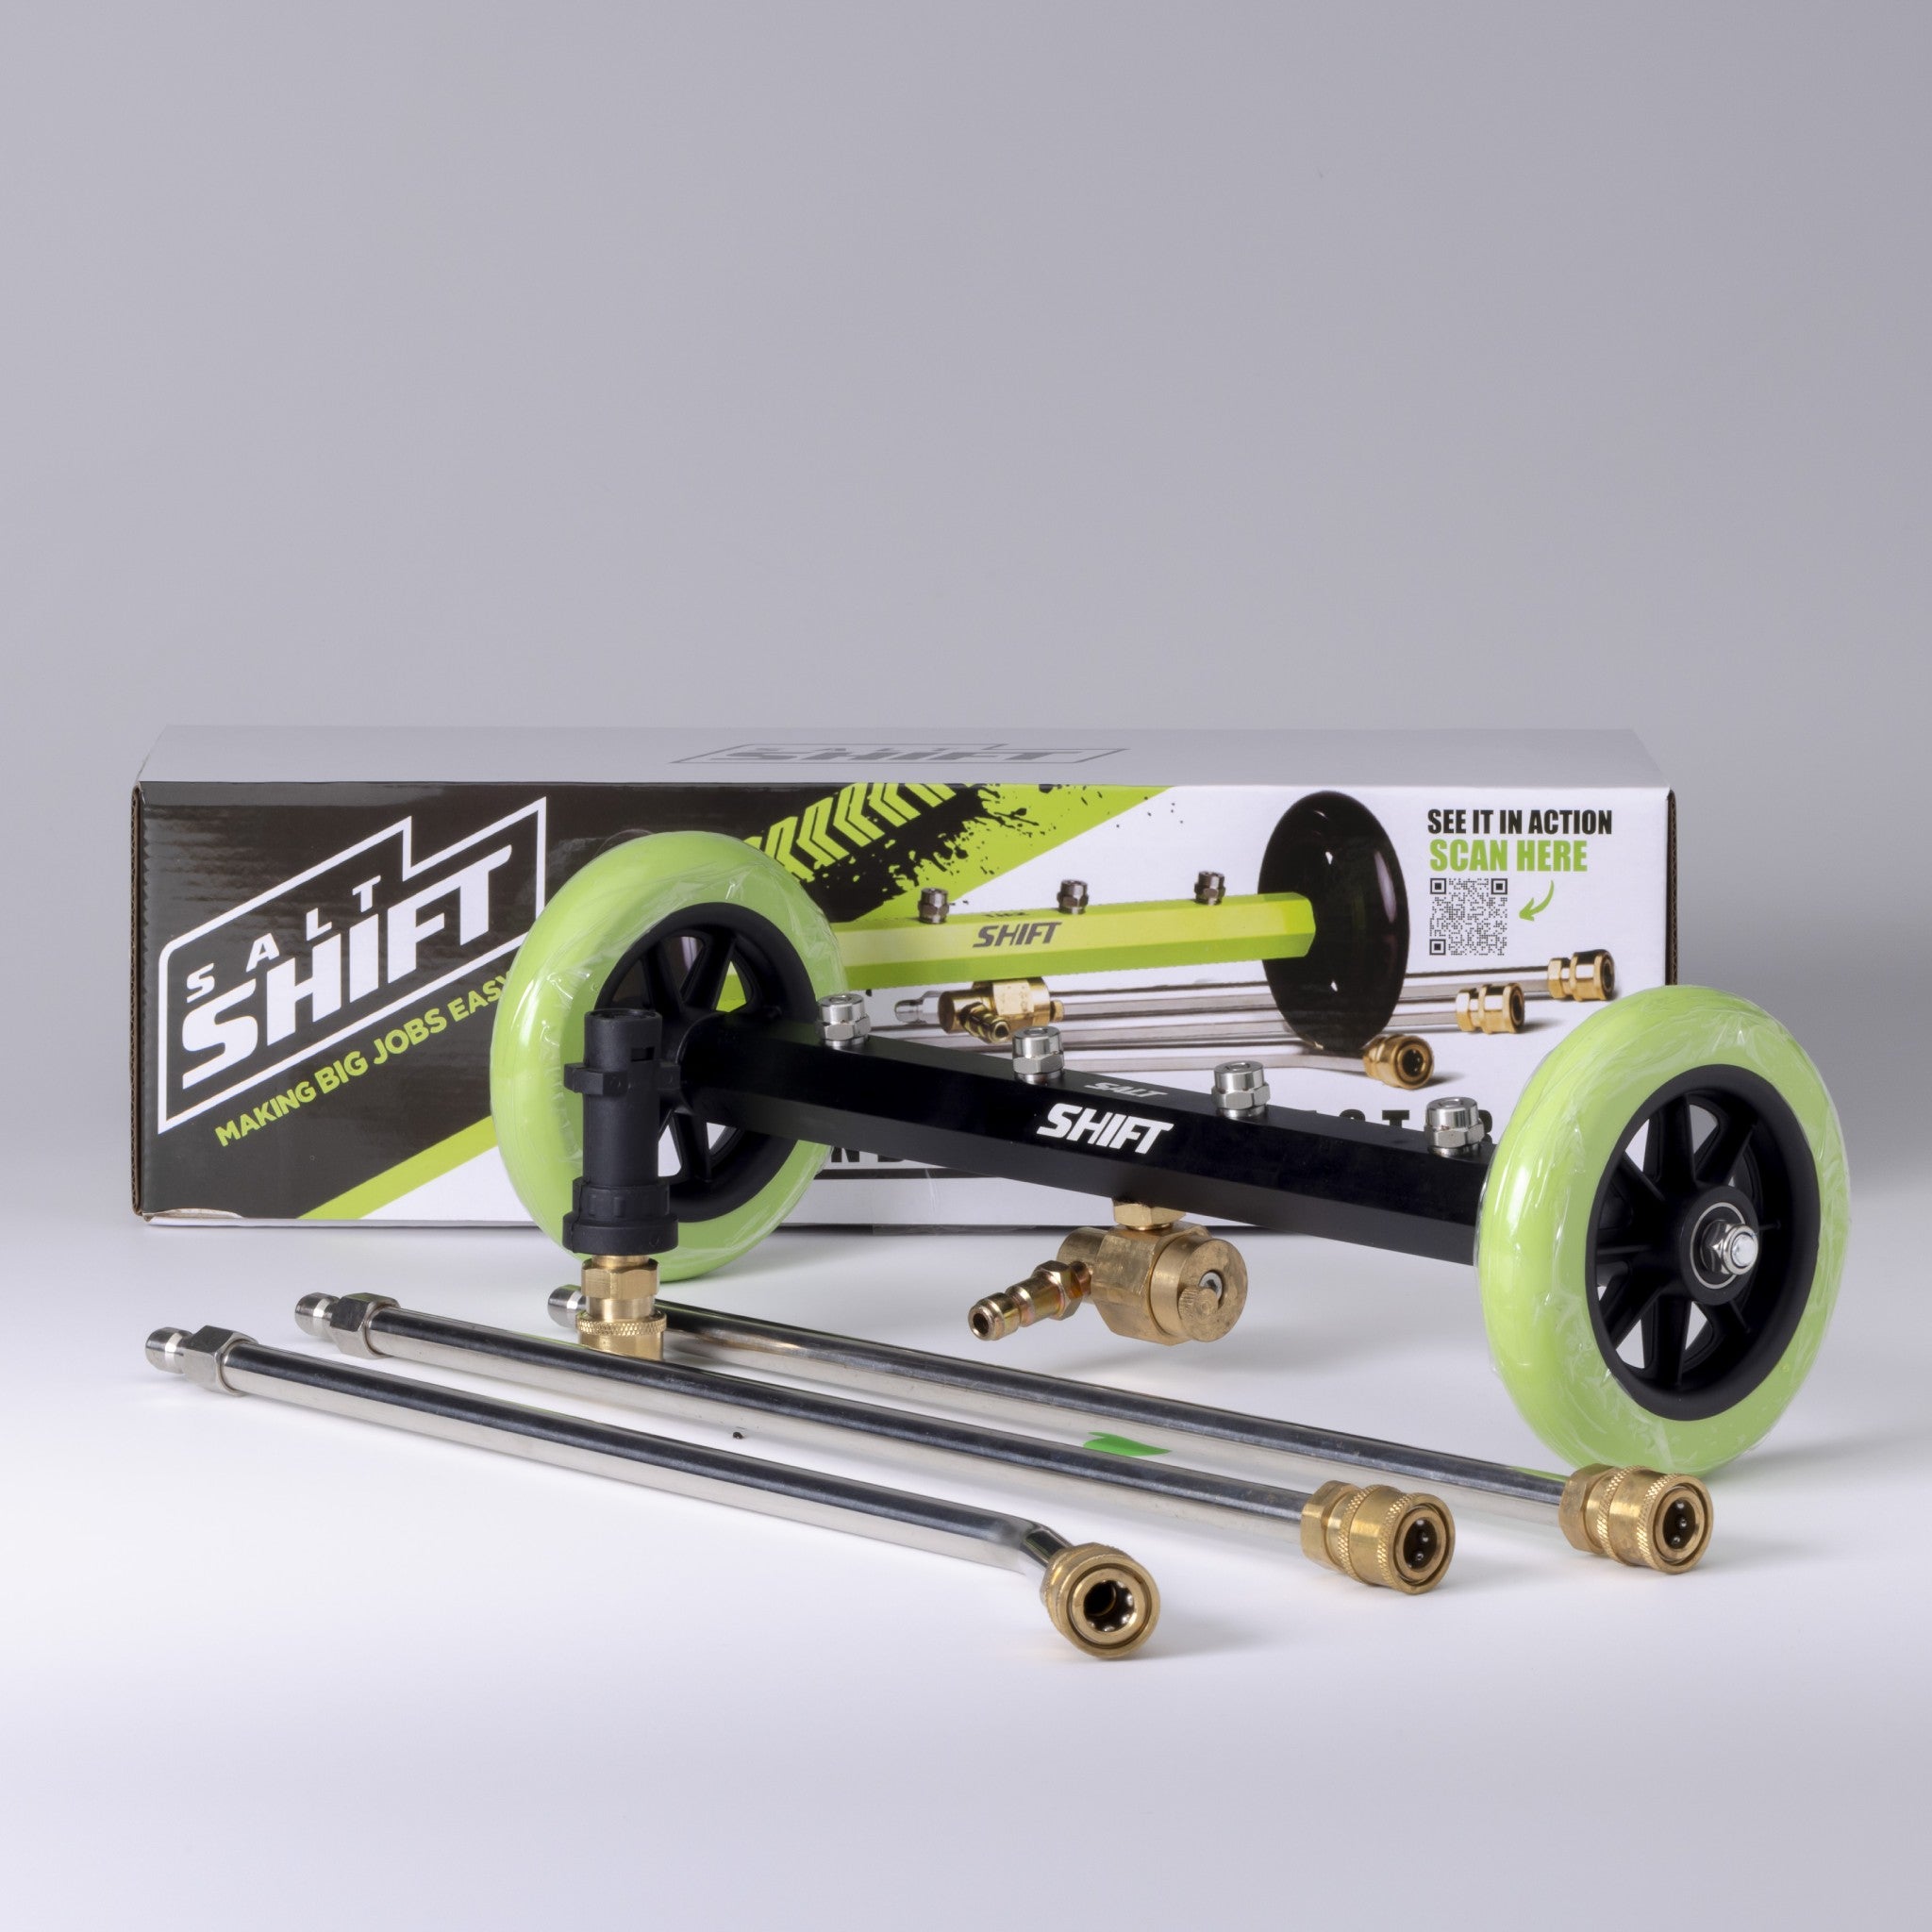 Salt Shift Off-Road Care  High-Performance 4X4 Kits